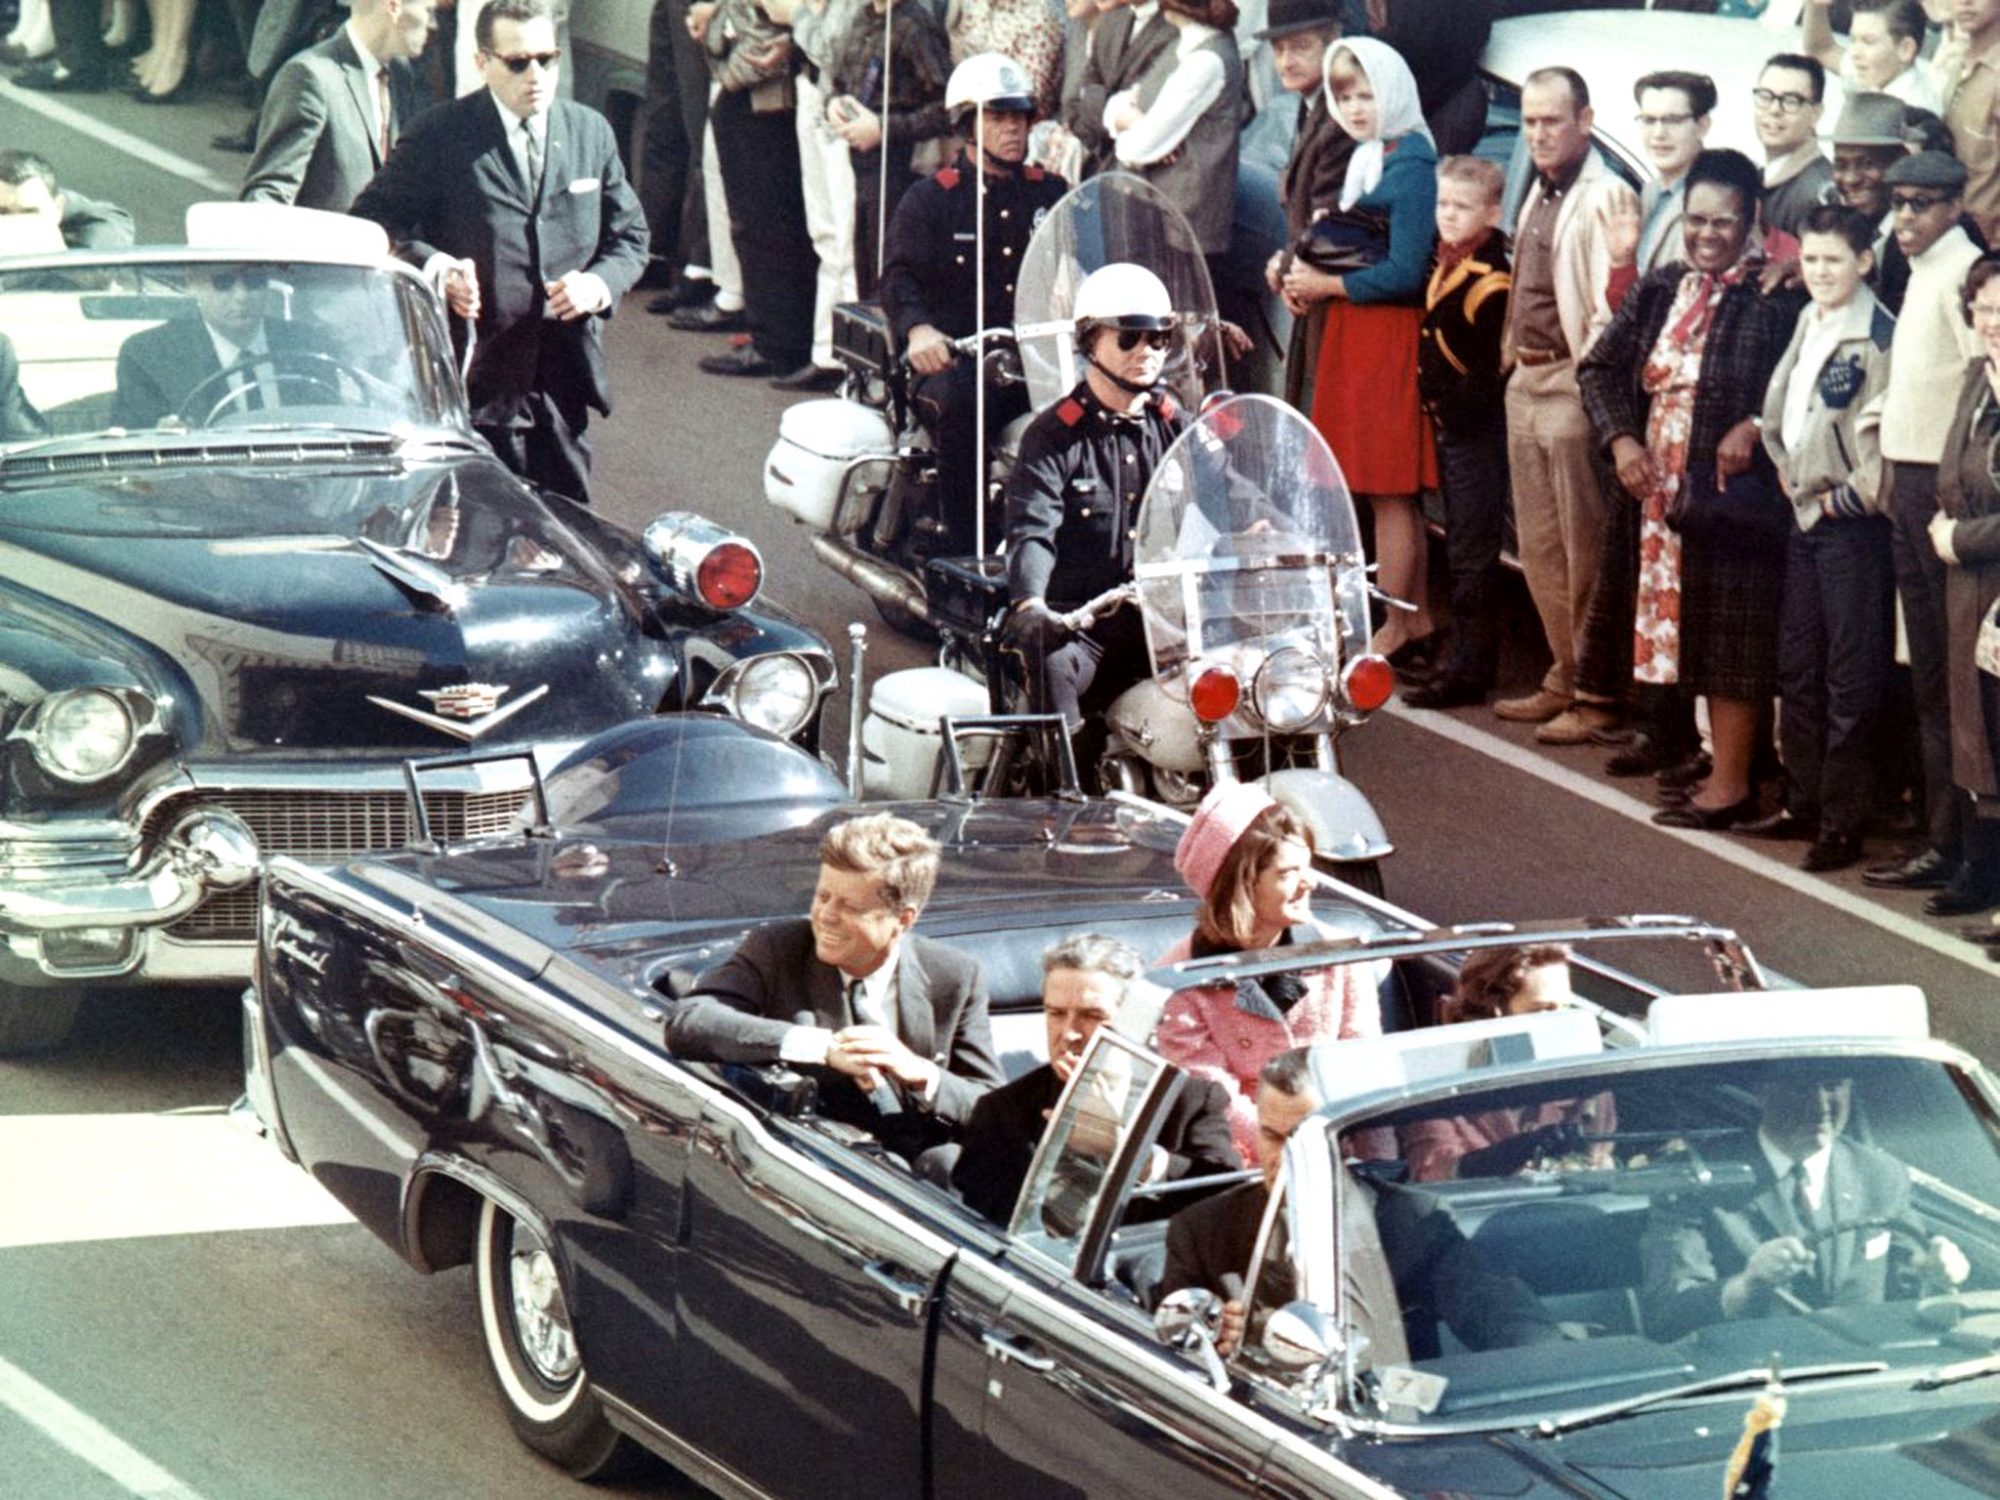 1963 - JFK assassinated #2 (Wikimedia commons)